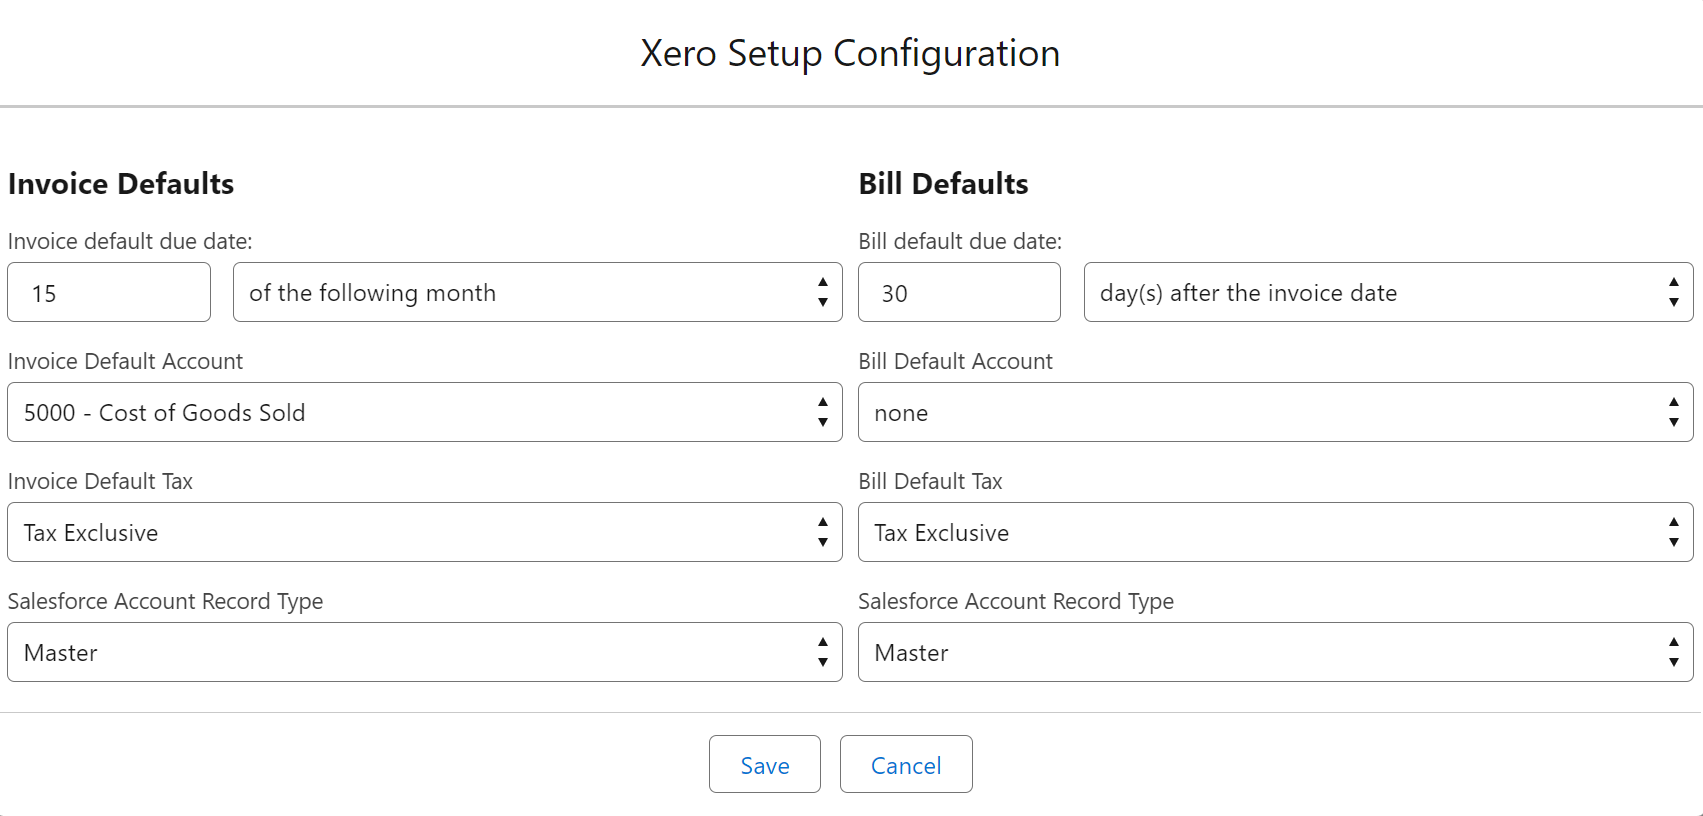 Xero Setup Configuration